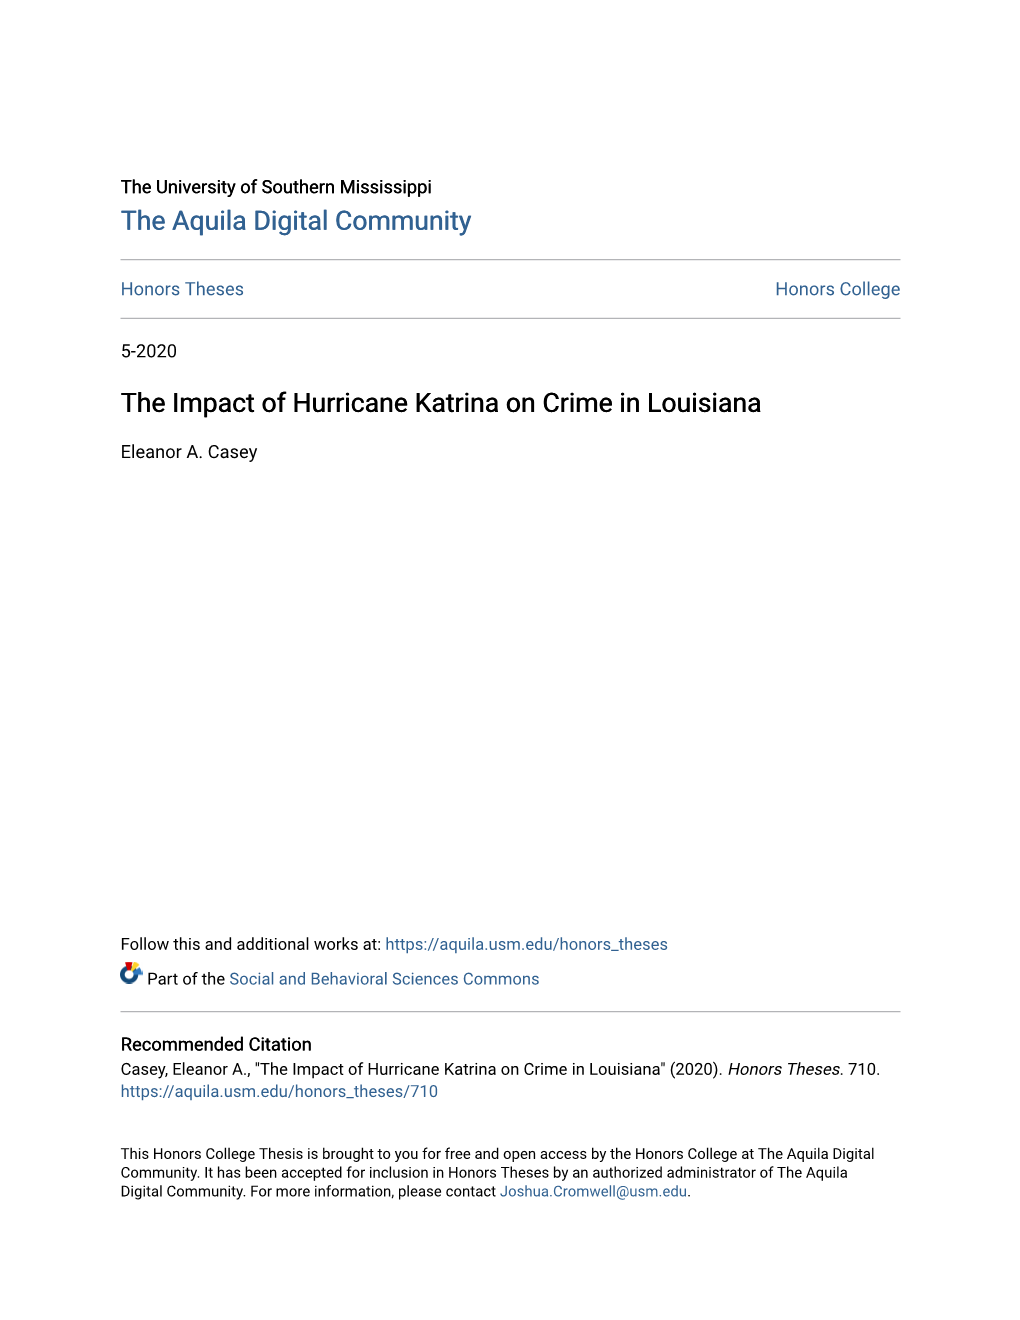 The Impact of Hurricane Katrina on Crime in Louisiana